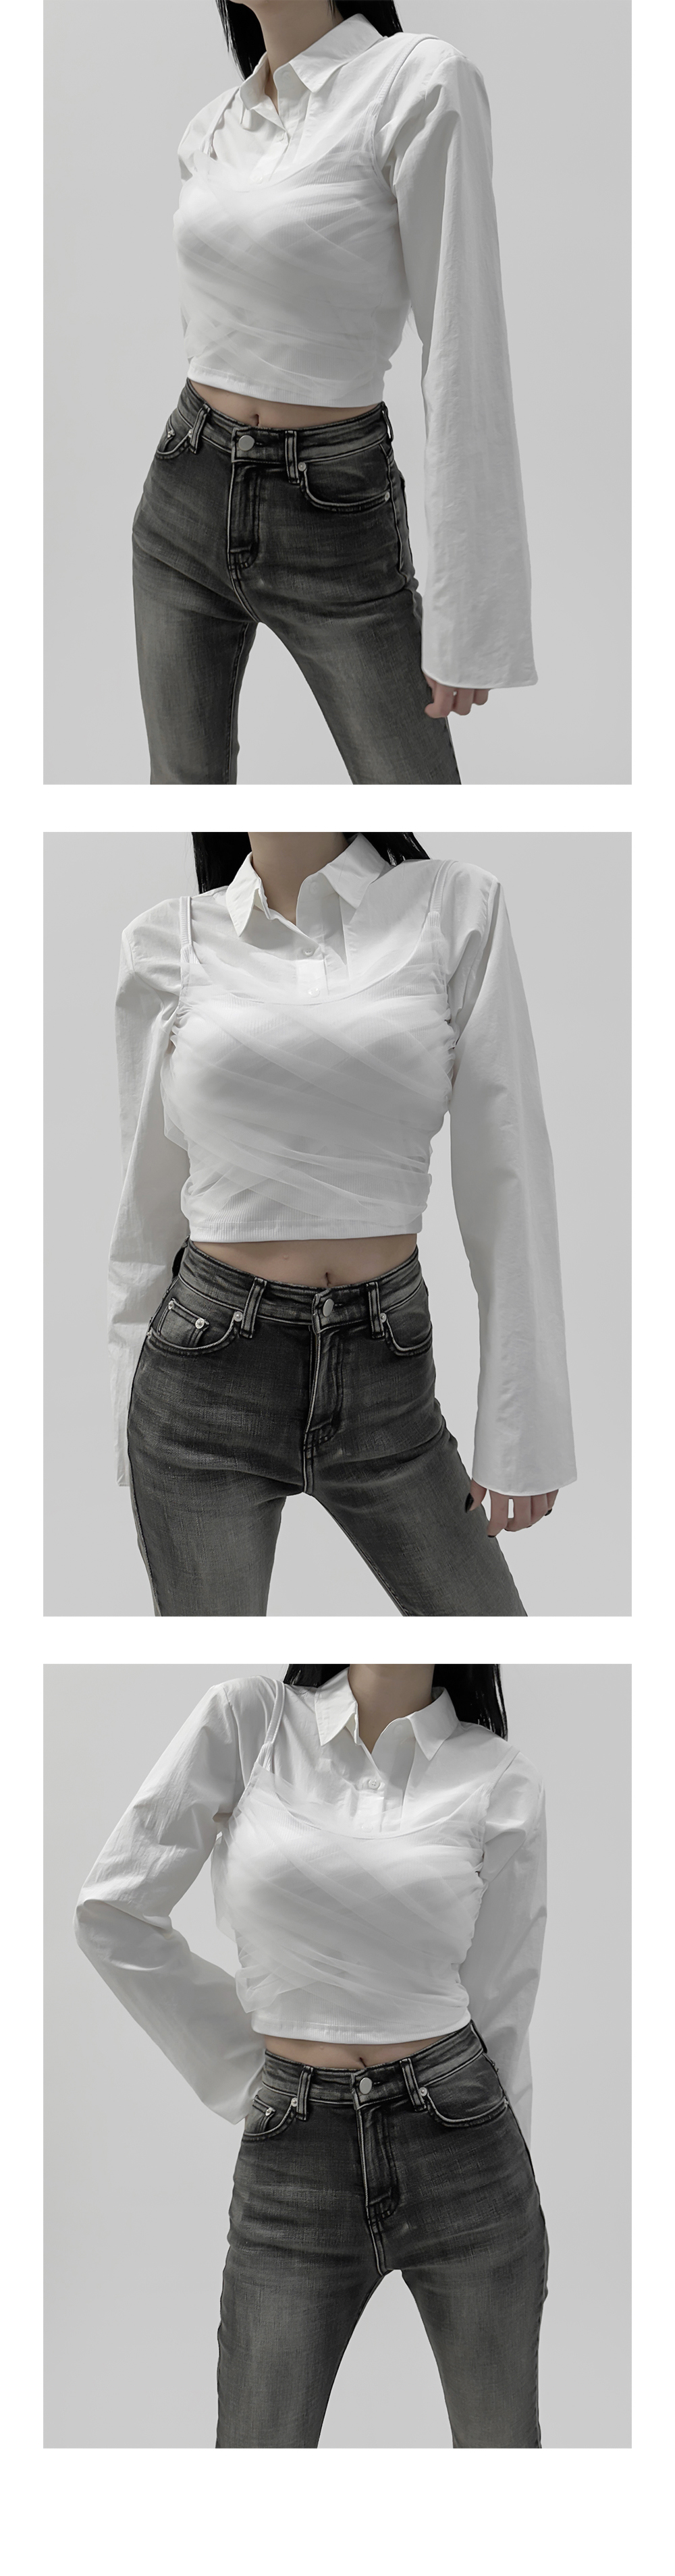 suspenders skirt/pants white color image-S1L11